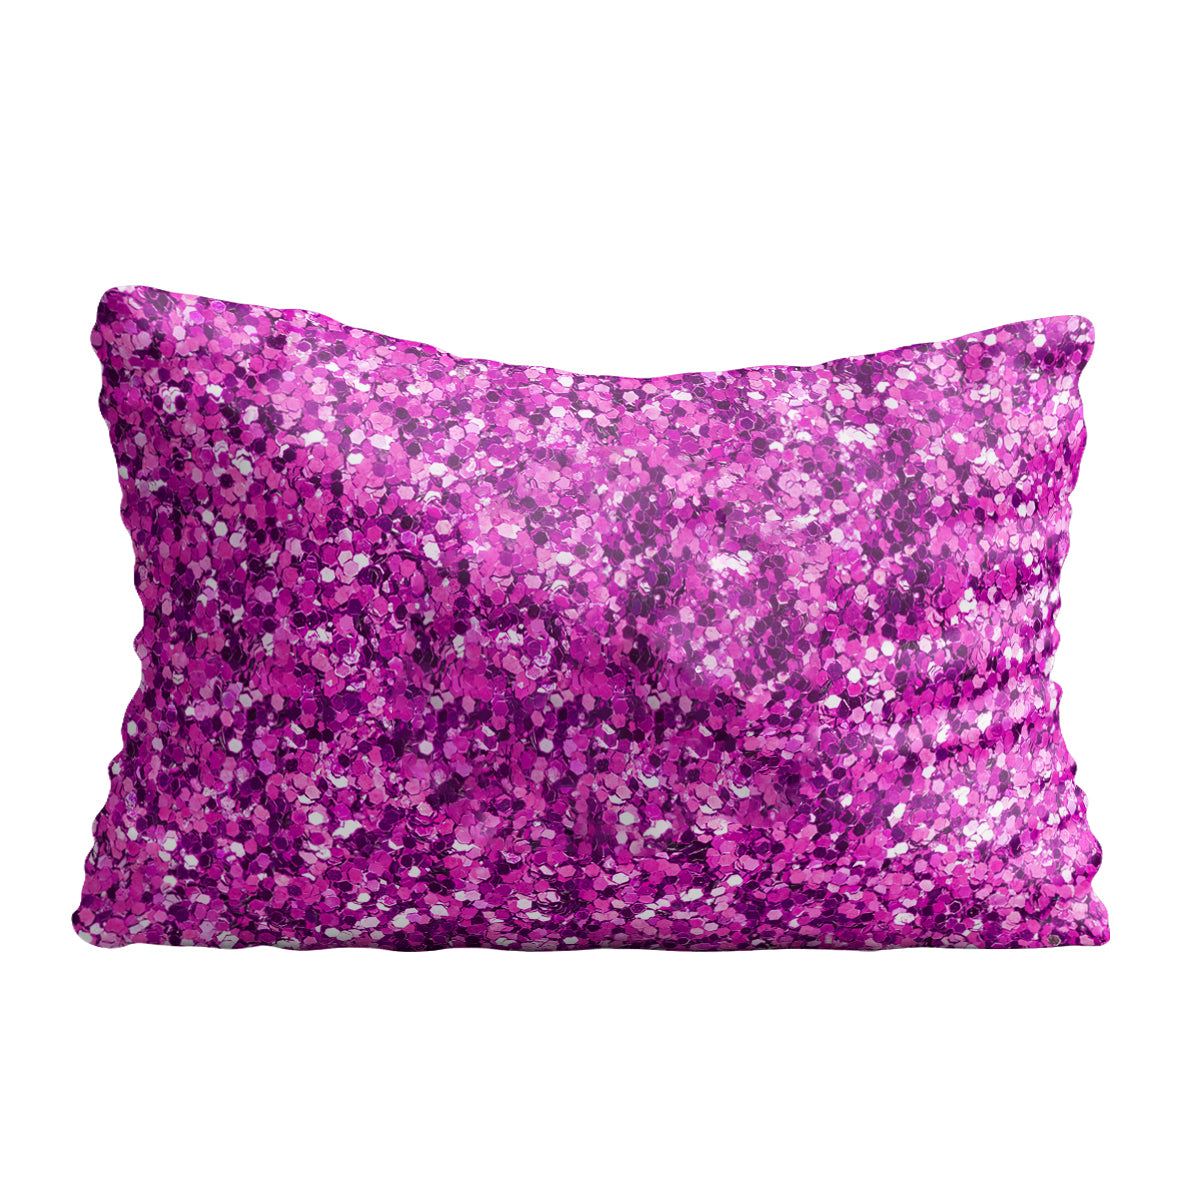 Monogram purple glitter pillow case - Wimziy&Co.